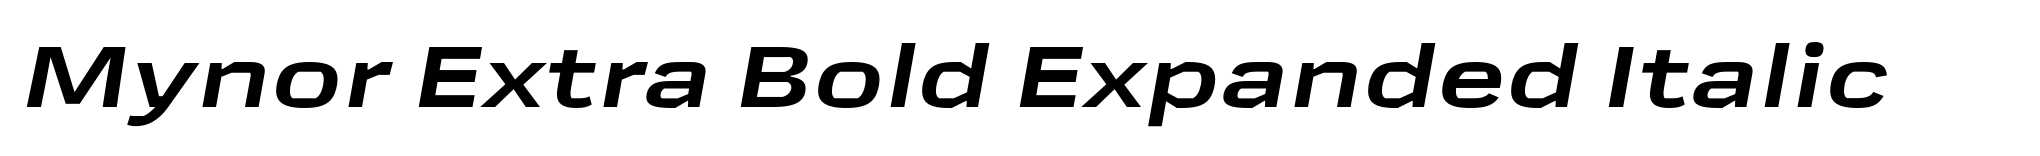 Mynor Extra Bold Expanded Italic image